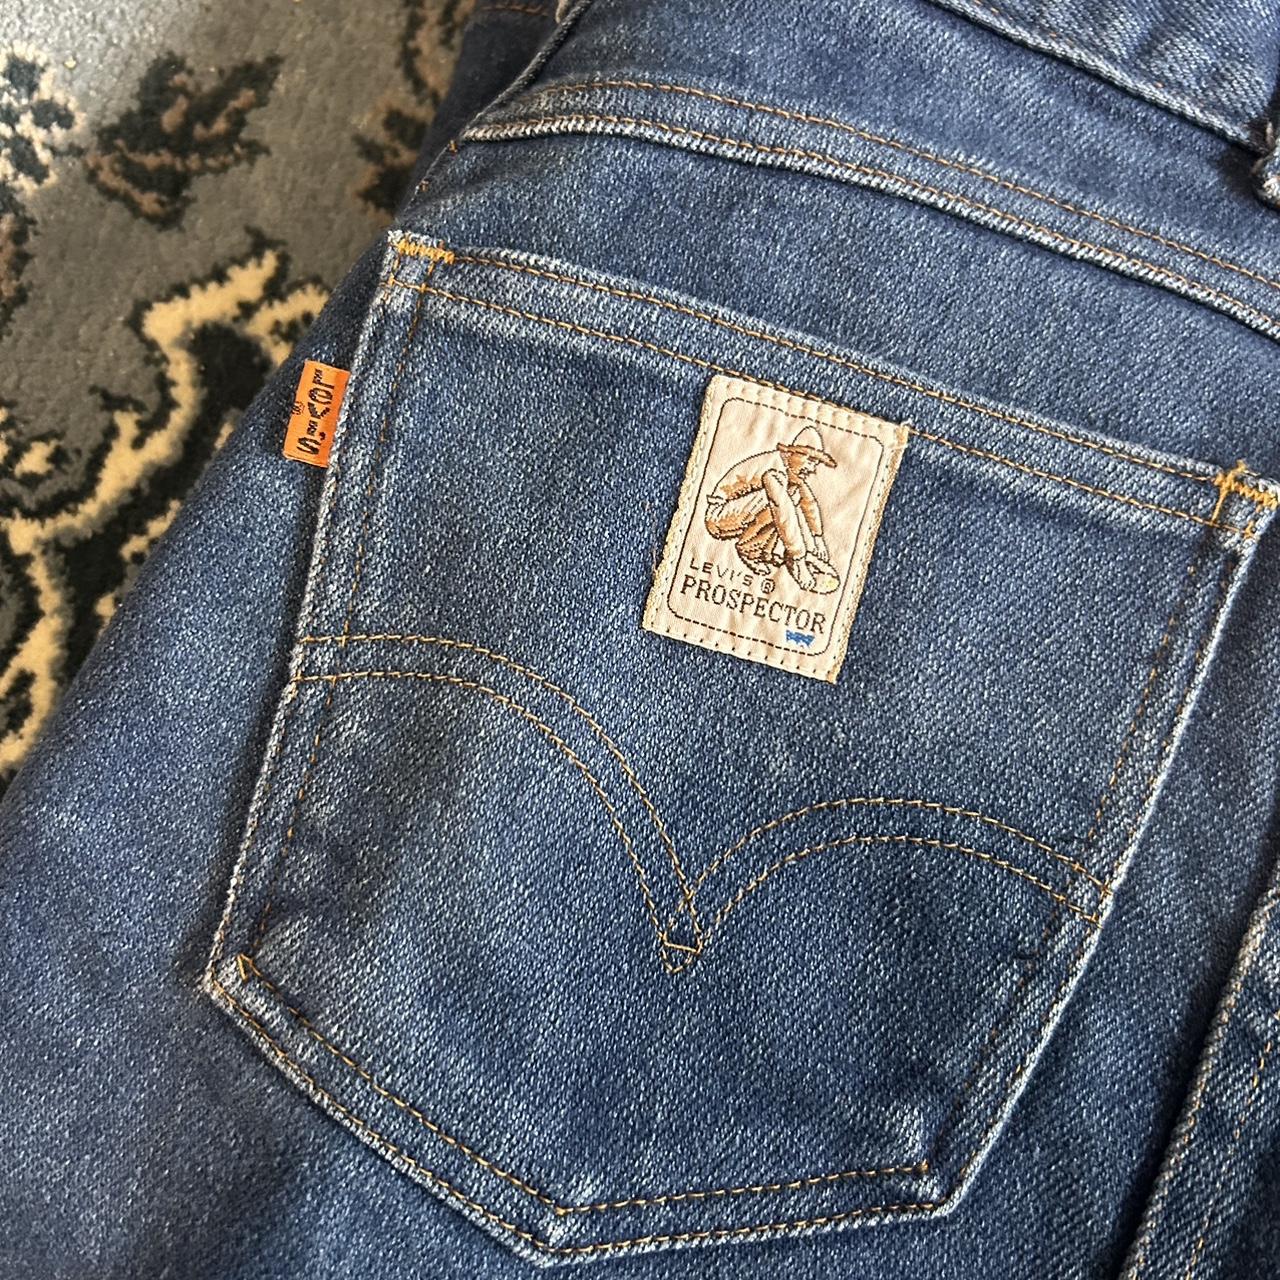 vintage 1970s levi’s prospector jeans waist:... - Depop